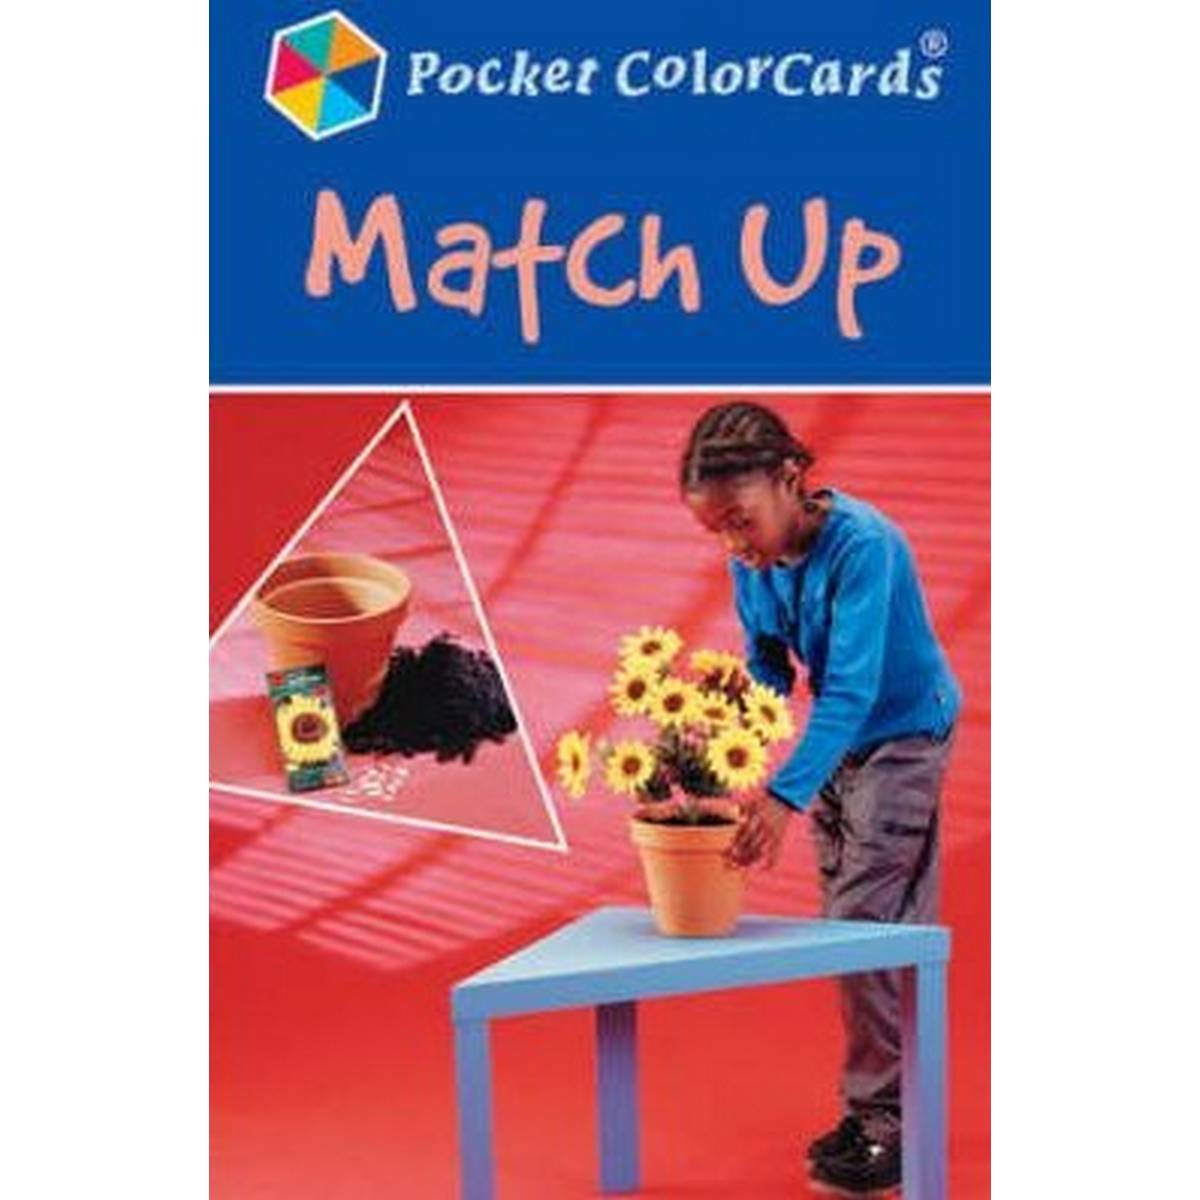 Pocket ColorCards: Match Up